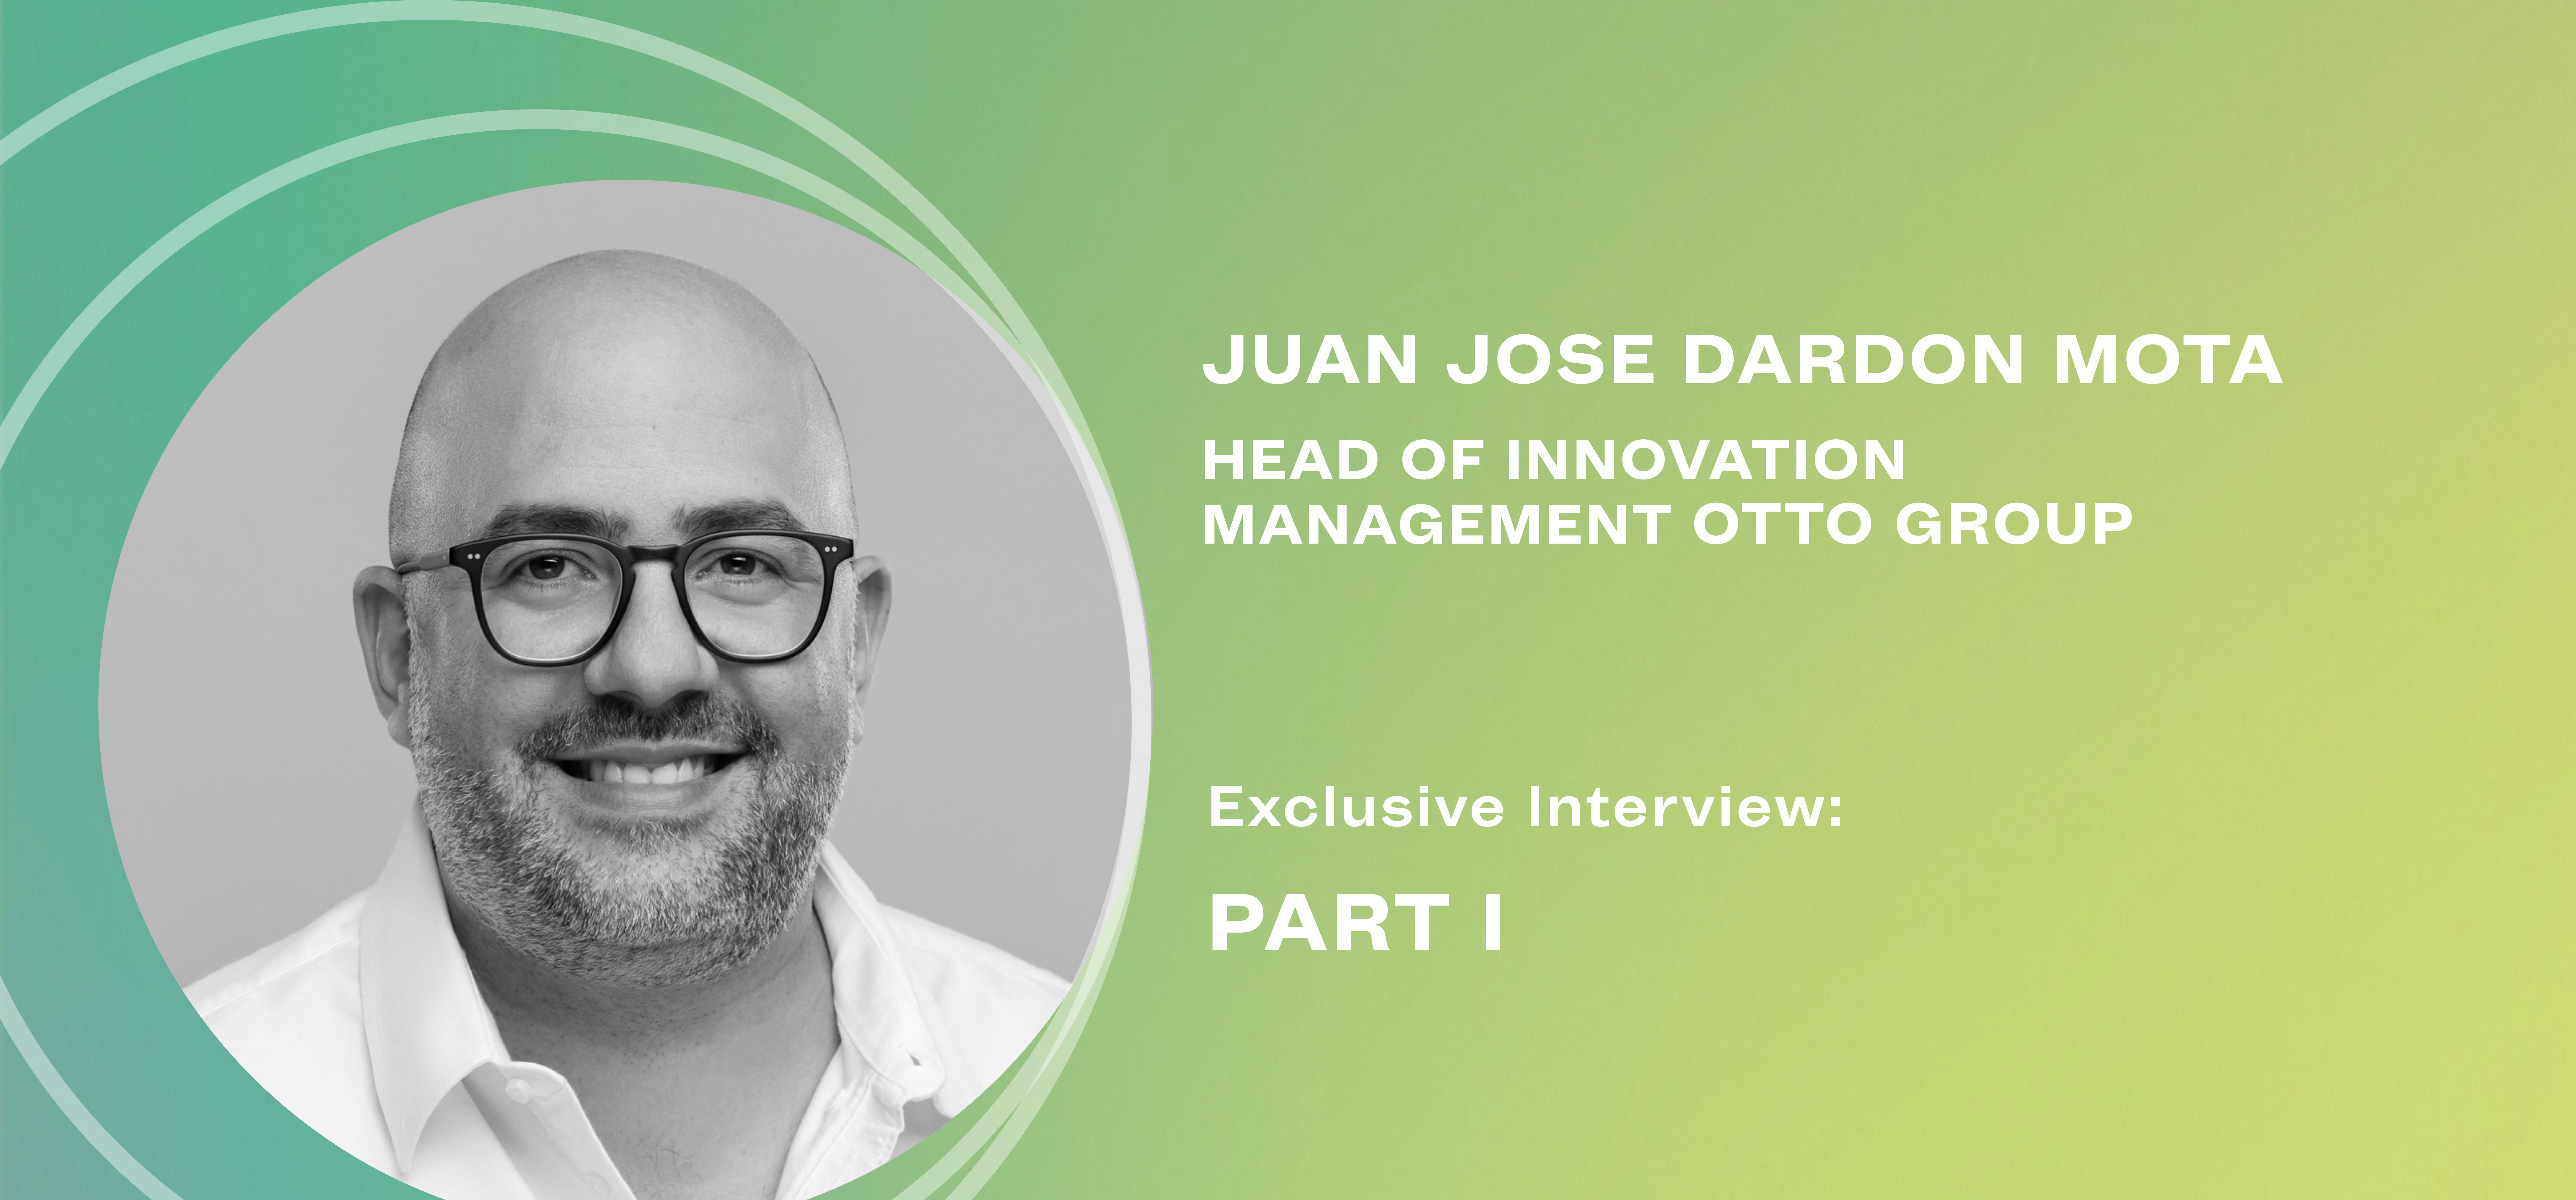 Head of Innovation at Otto Group, Juan Jose Dardon Motta,, on how corporates innovate